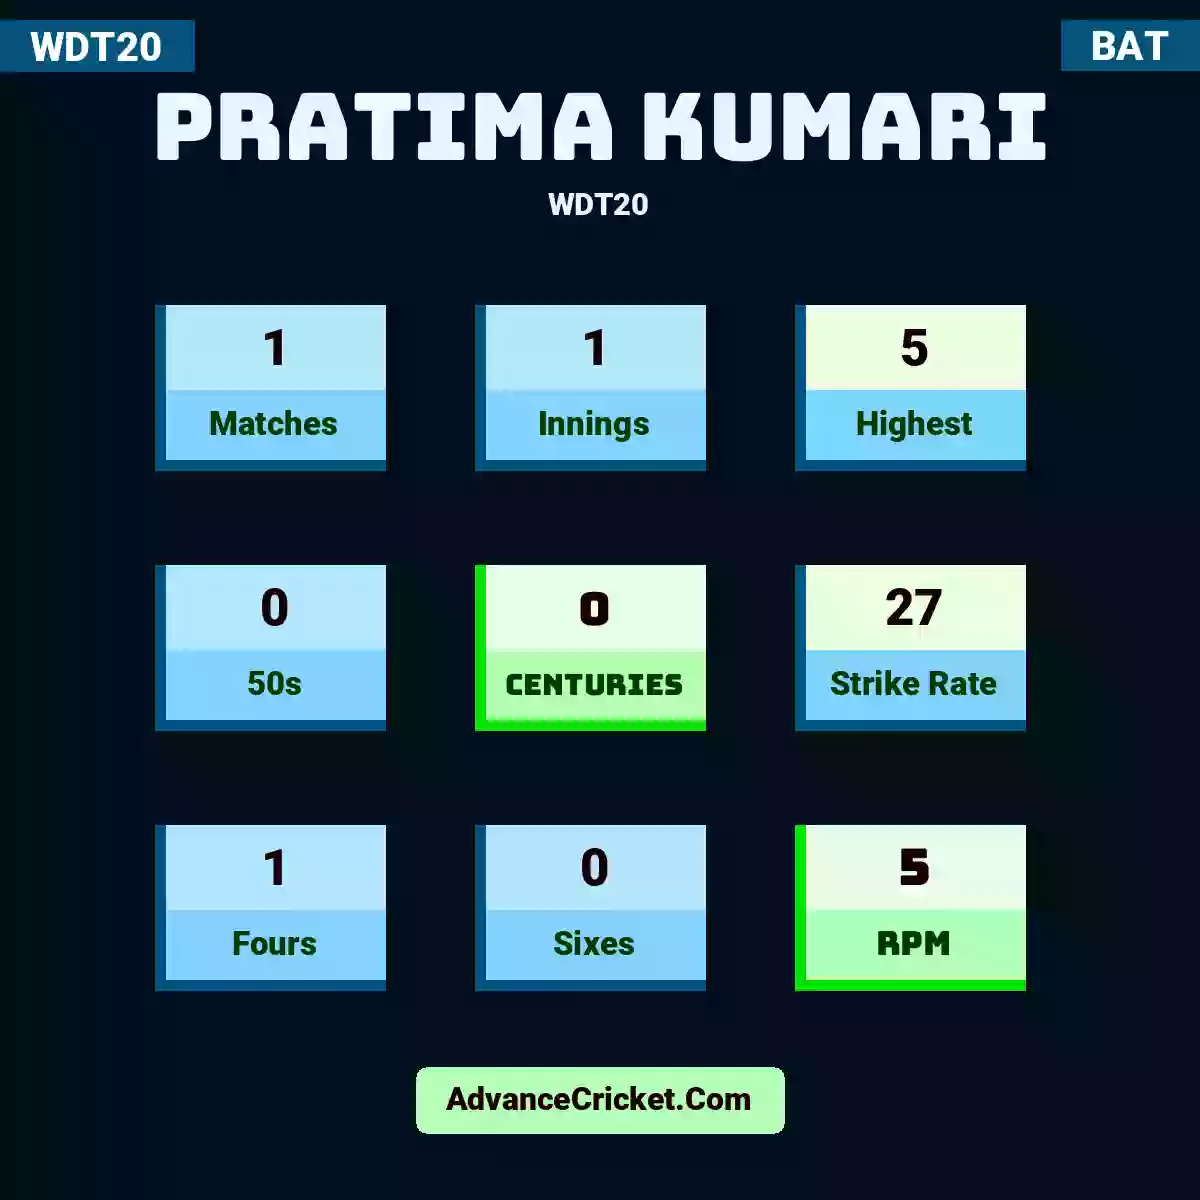 Pratima Kumari WDT20 , Pratima Kumari played 1 matches, scored 5 runs as highest, 0 half-centuries, and 0 centuries, with a strike rate of 27. P.Kumari hit 1 fours and 0 sixes, with an RPM of 5.